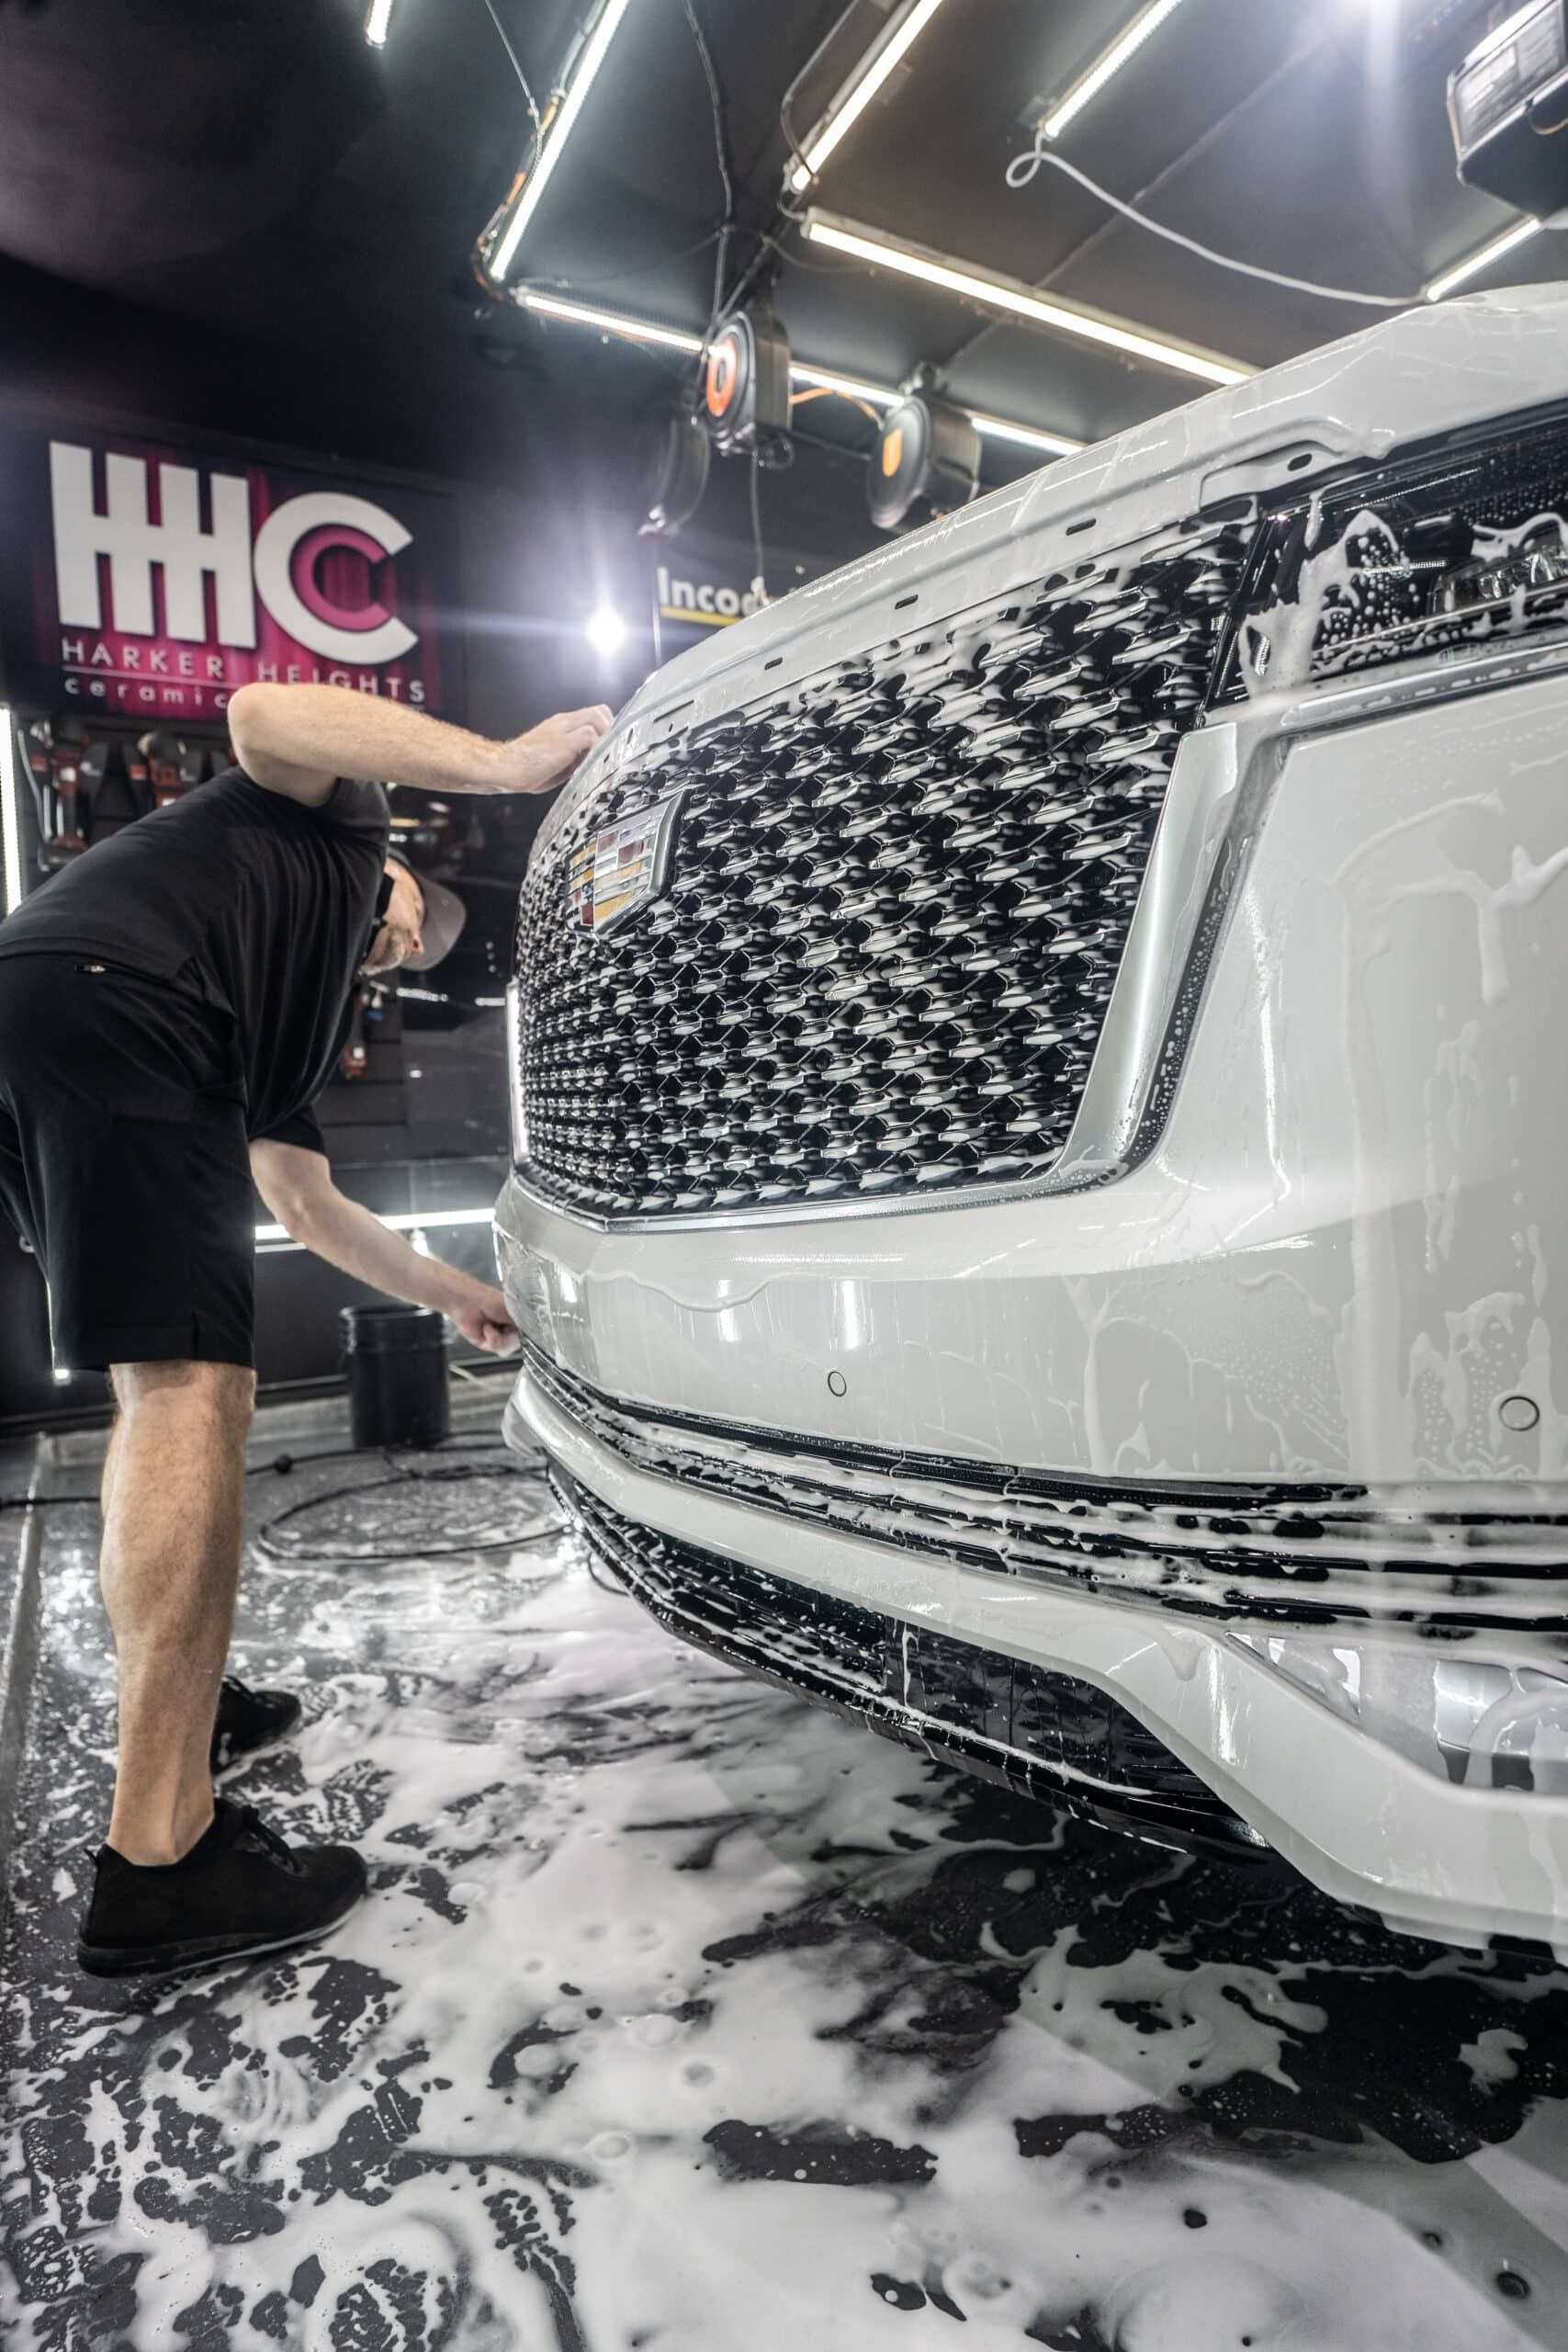 A man is washing a white car in a car wash.